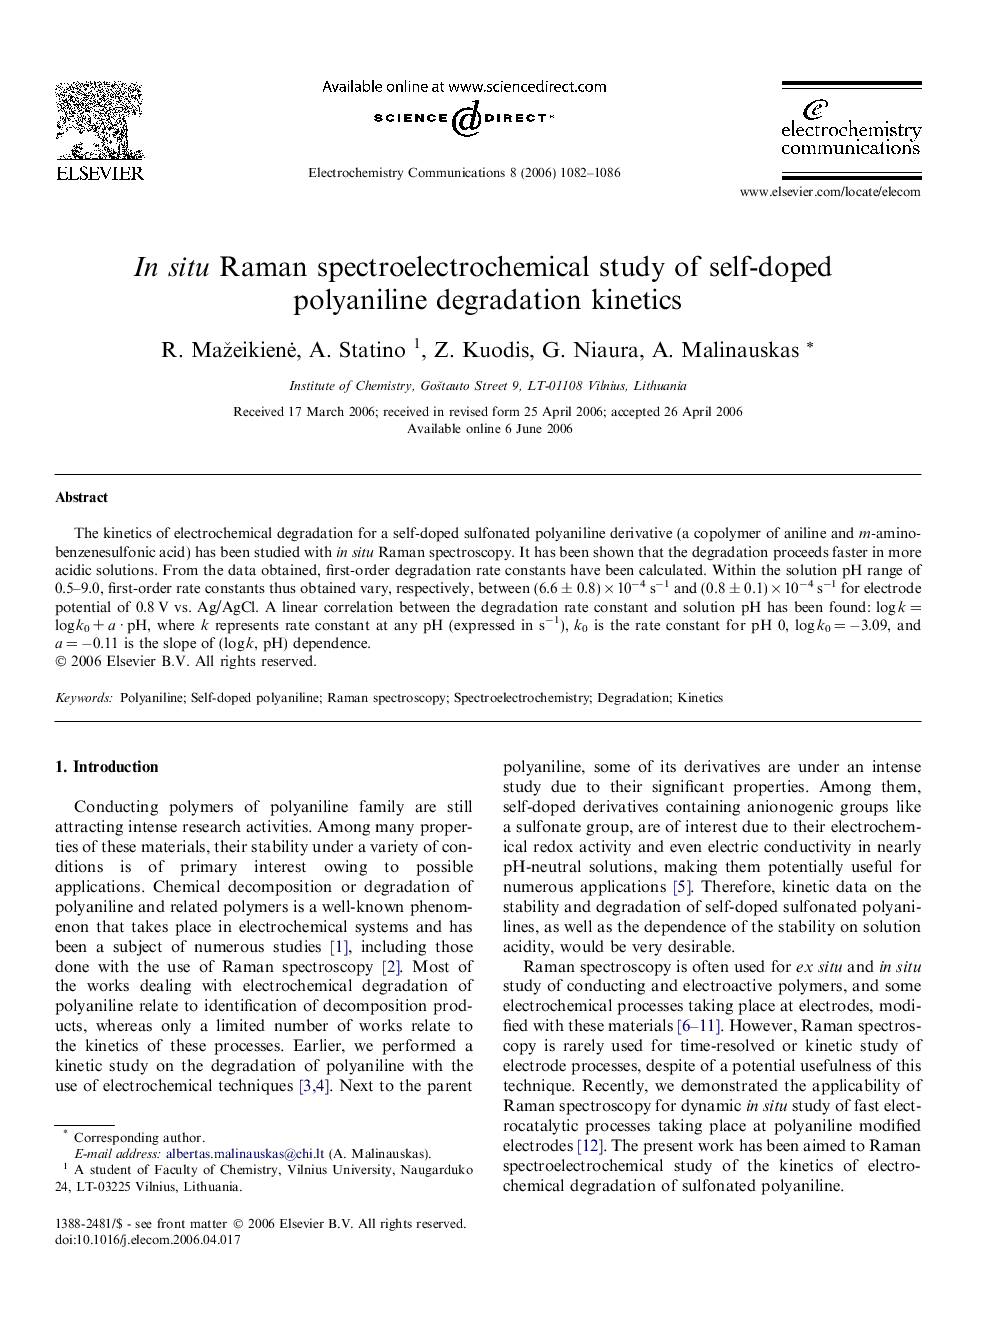 In situ Raman spectroelectrochemical study of self-doped polyaniline degradation kinetics